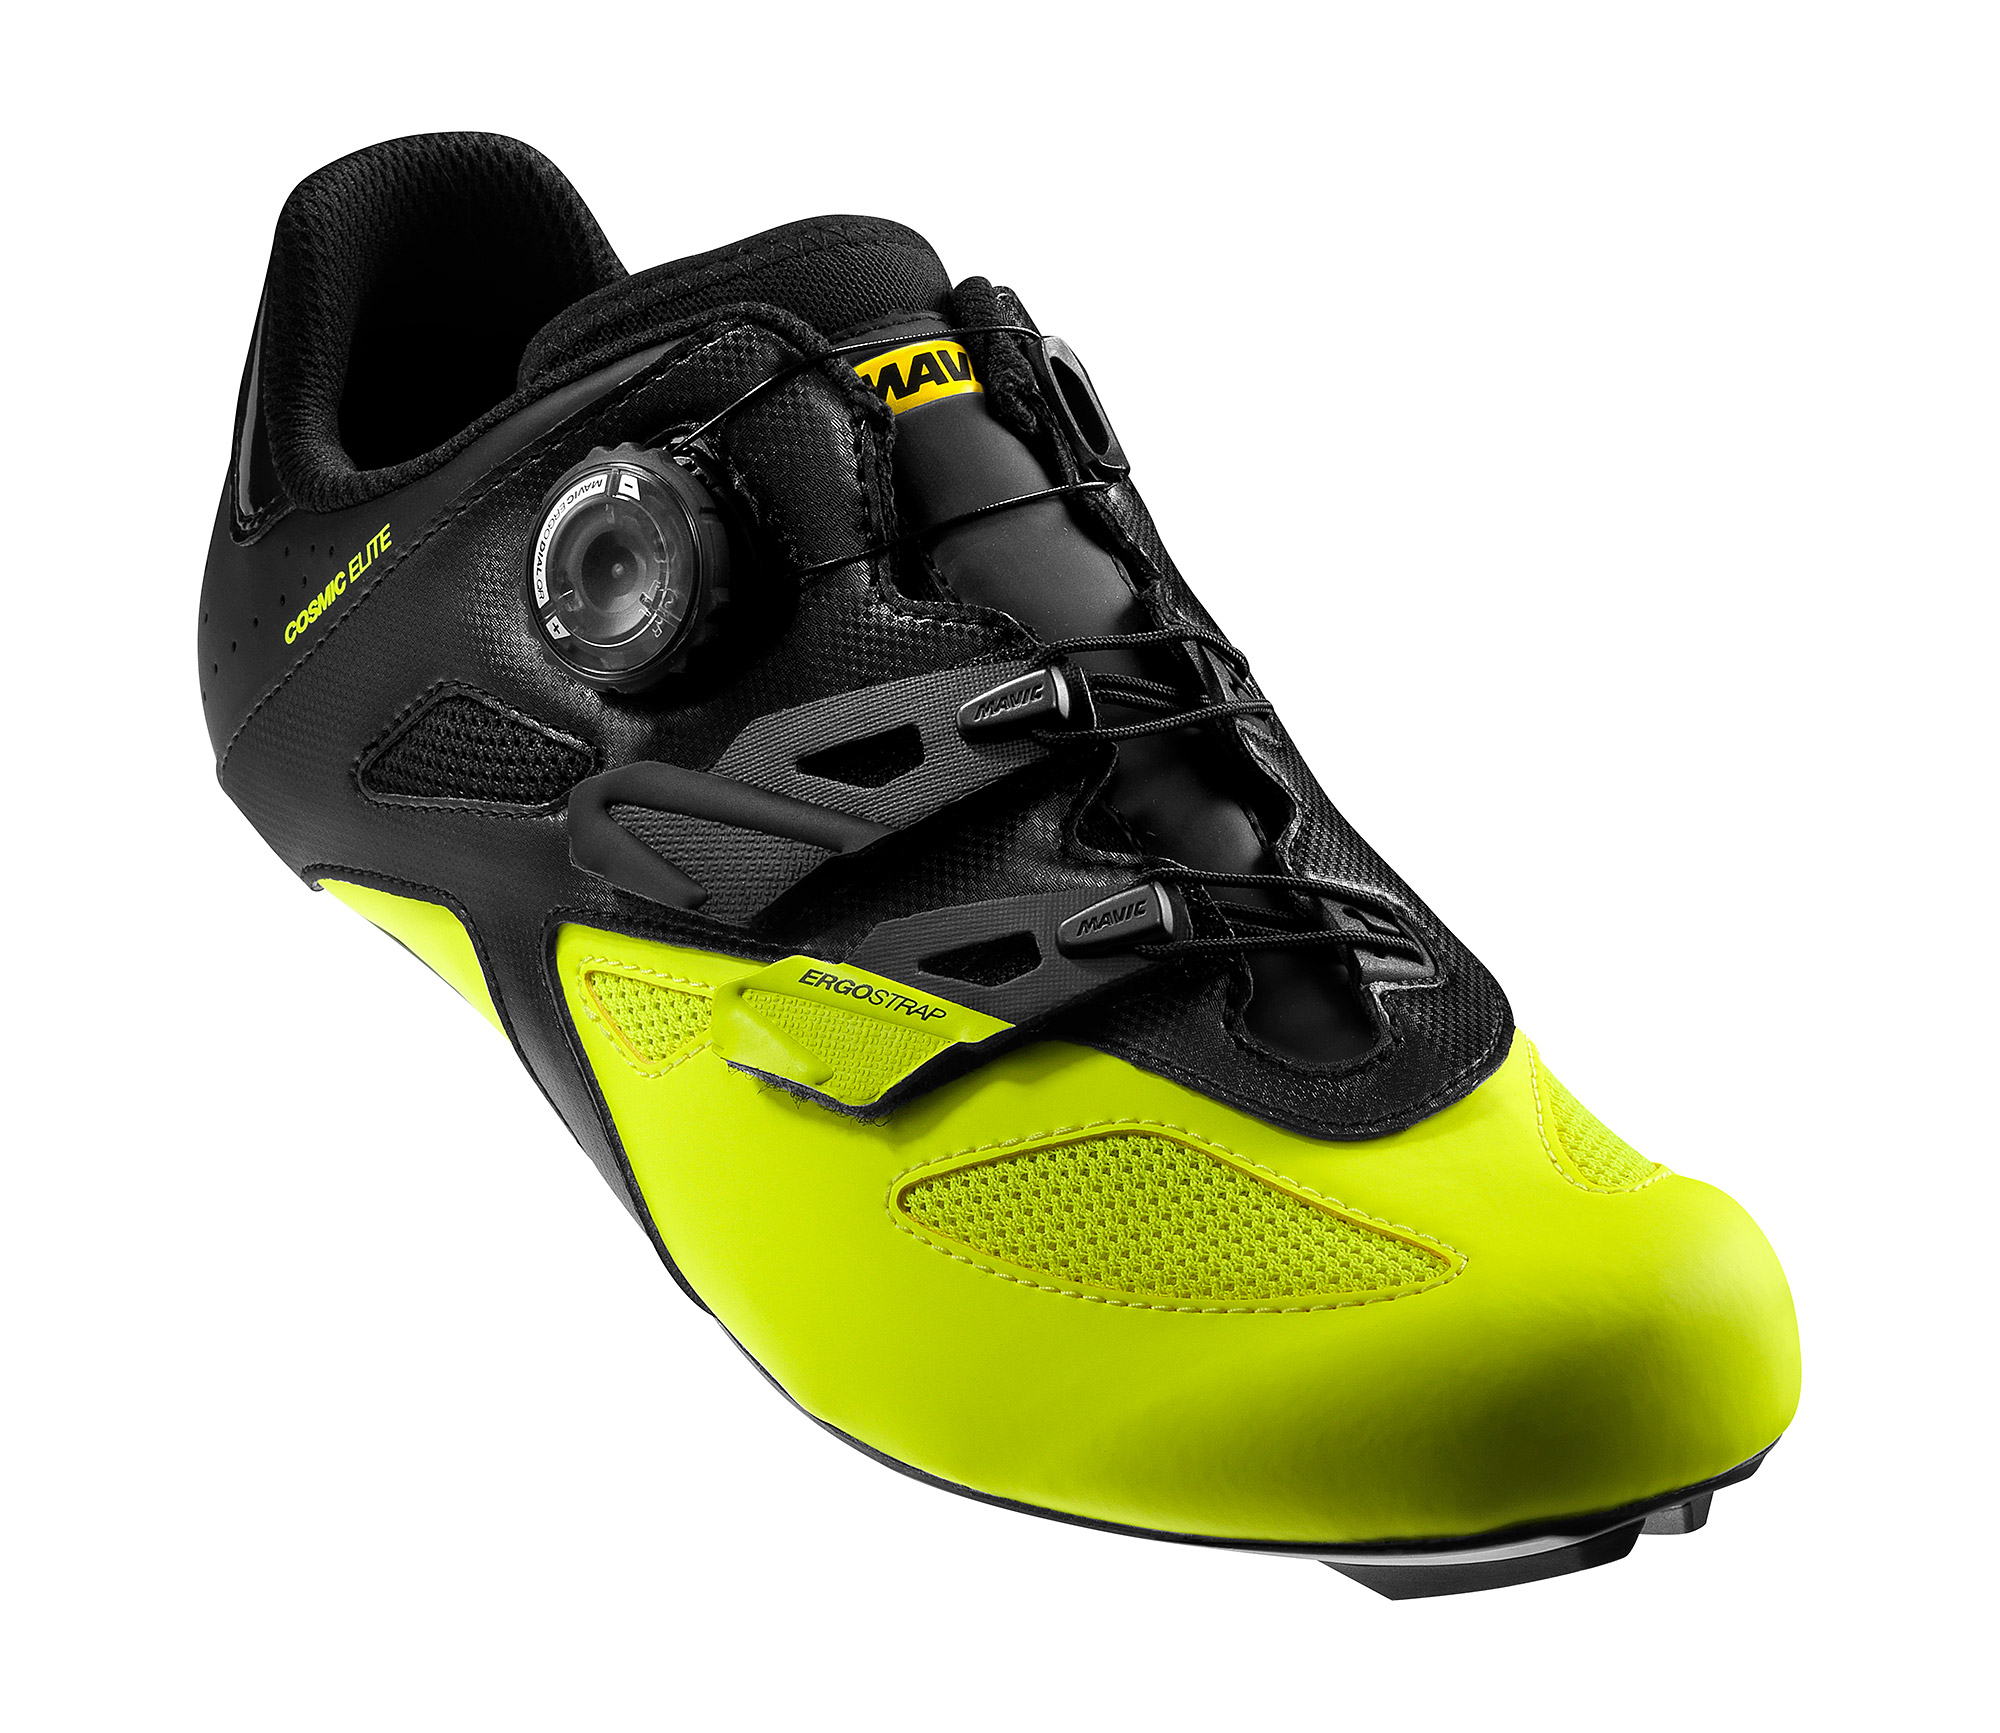 Обувь Mavic COSMIC ELITE, размер UK 7 (40 2/3, 257мм) Black/Black/Safety черно-желтая фото 